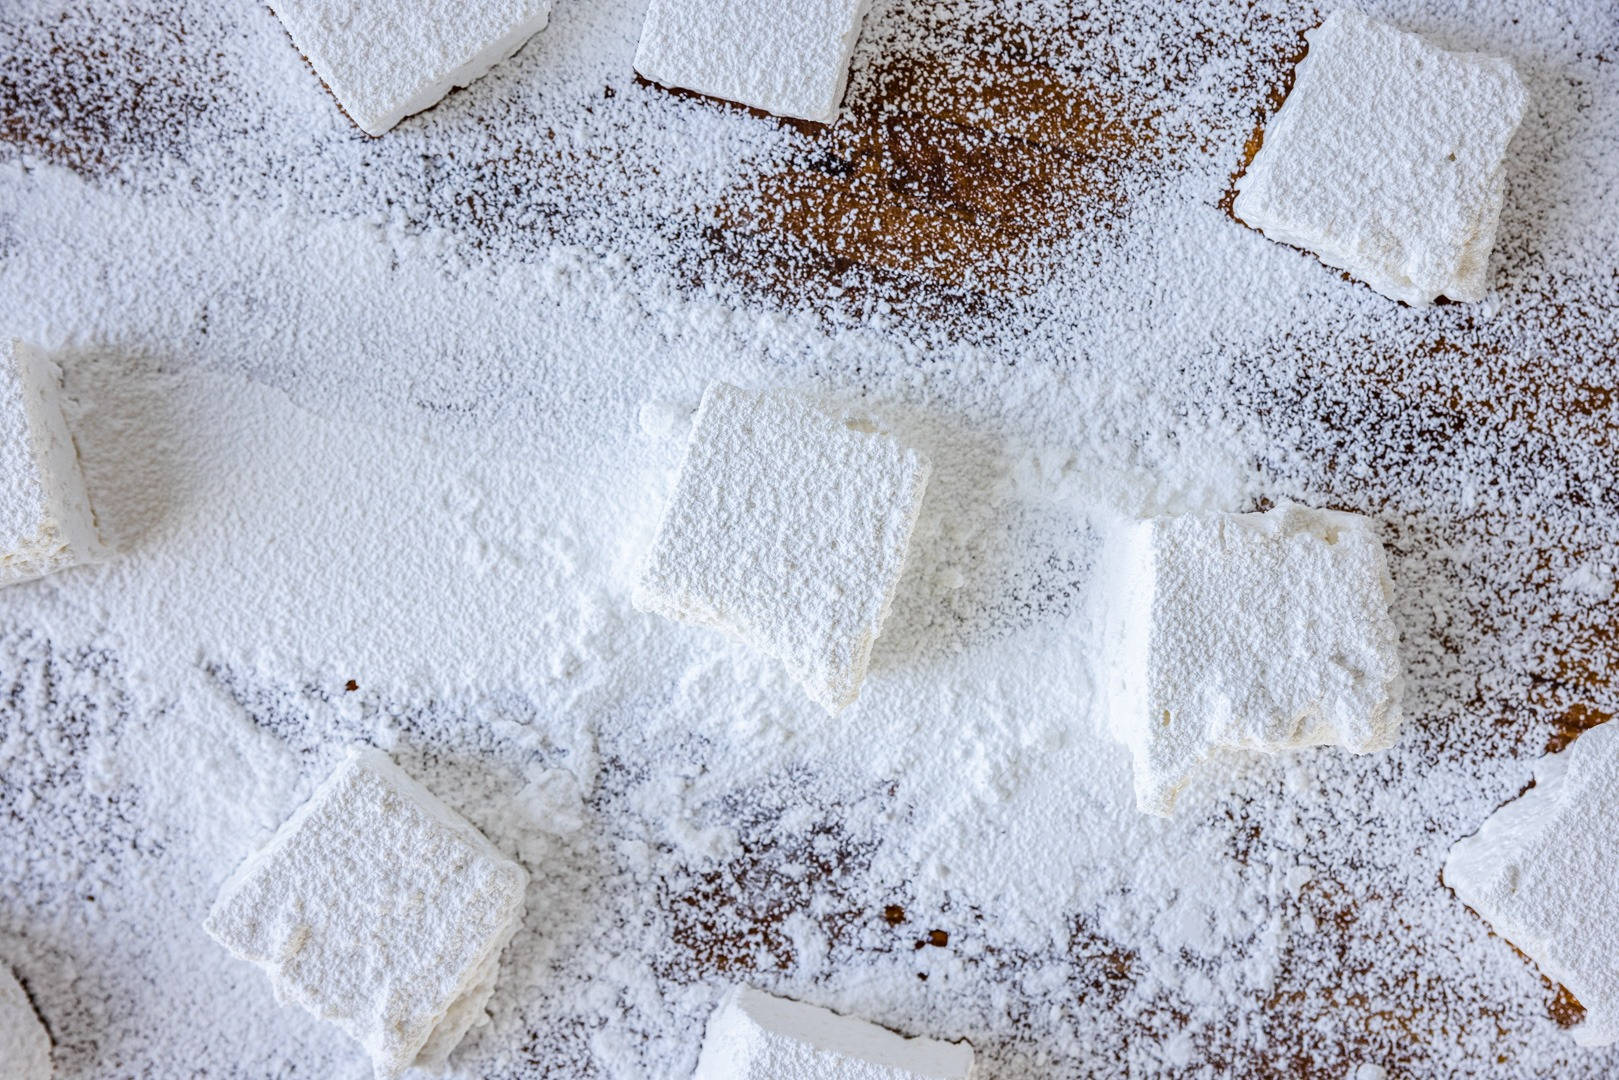 Caption: A Delicious Bite Waiting - Delicate White Marshmallows